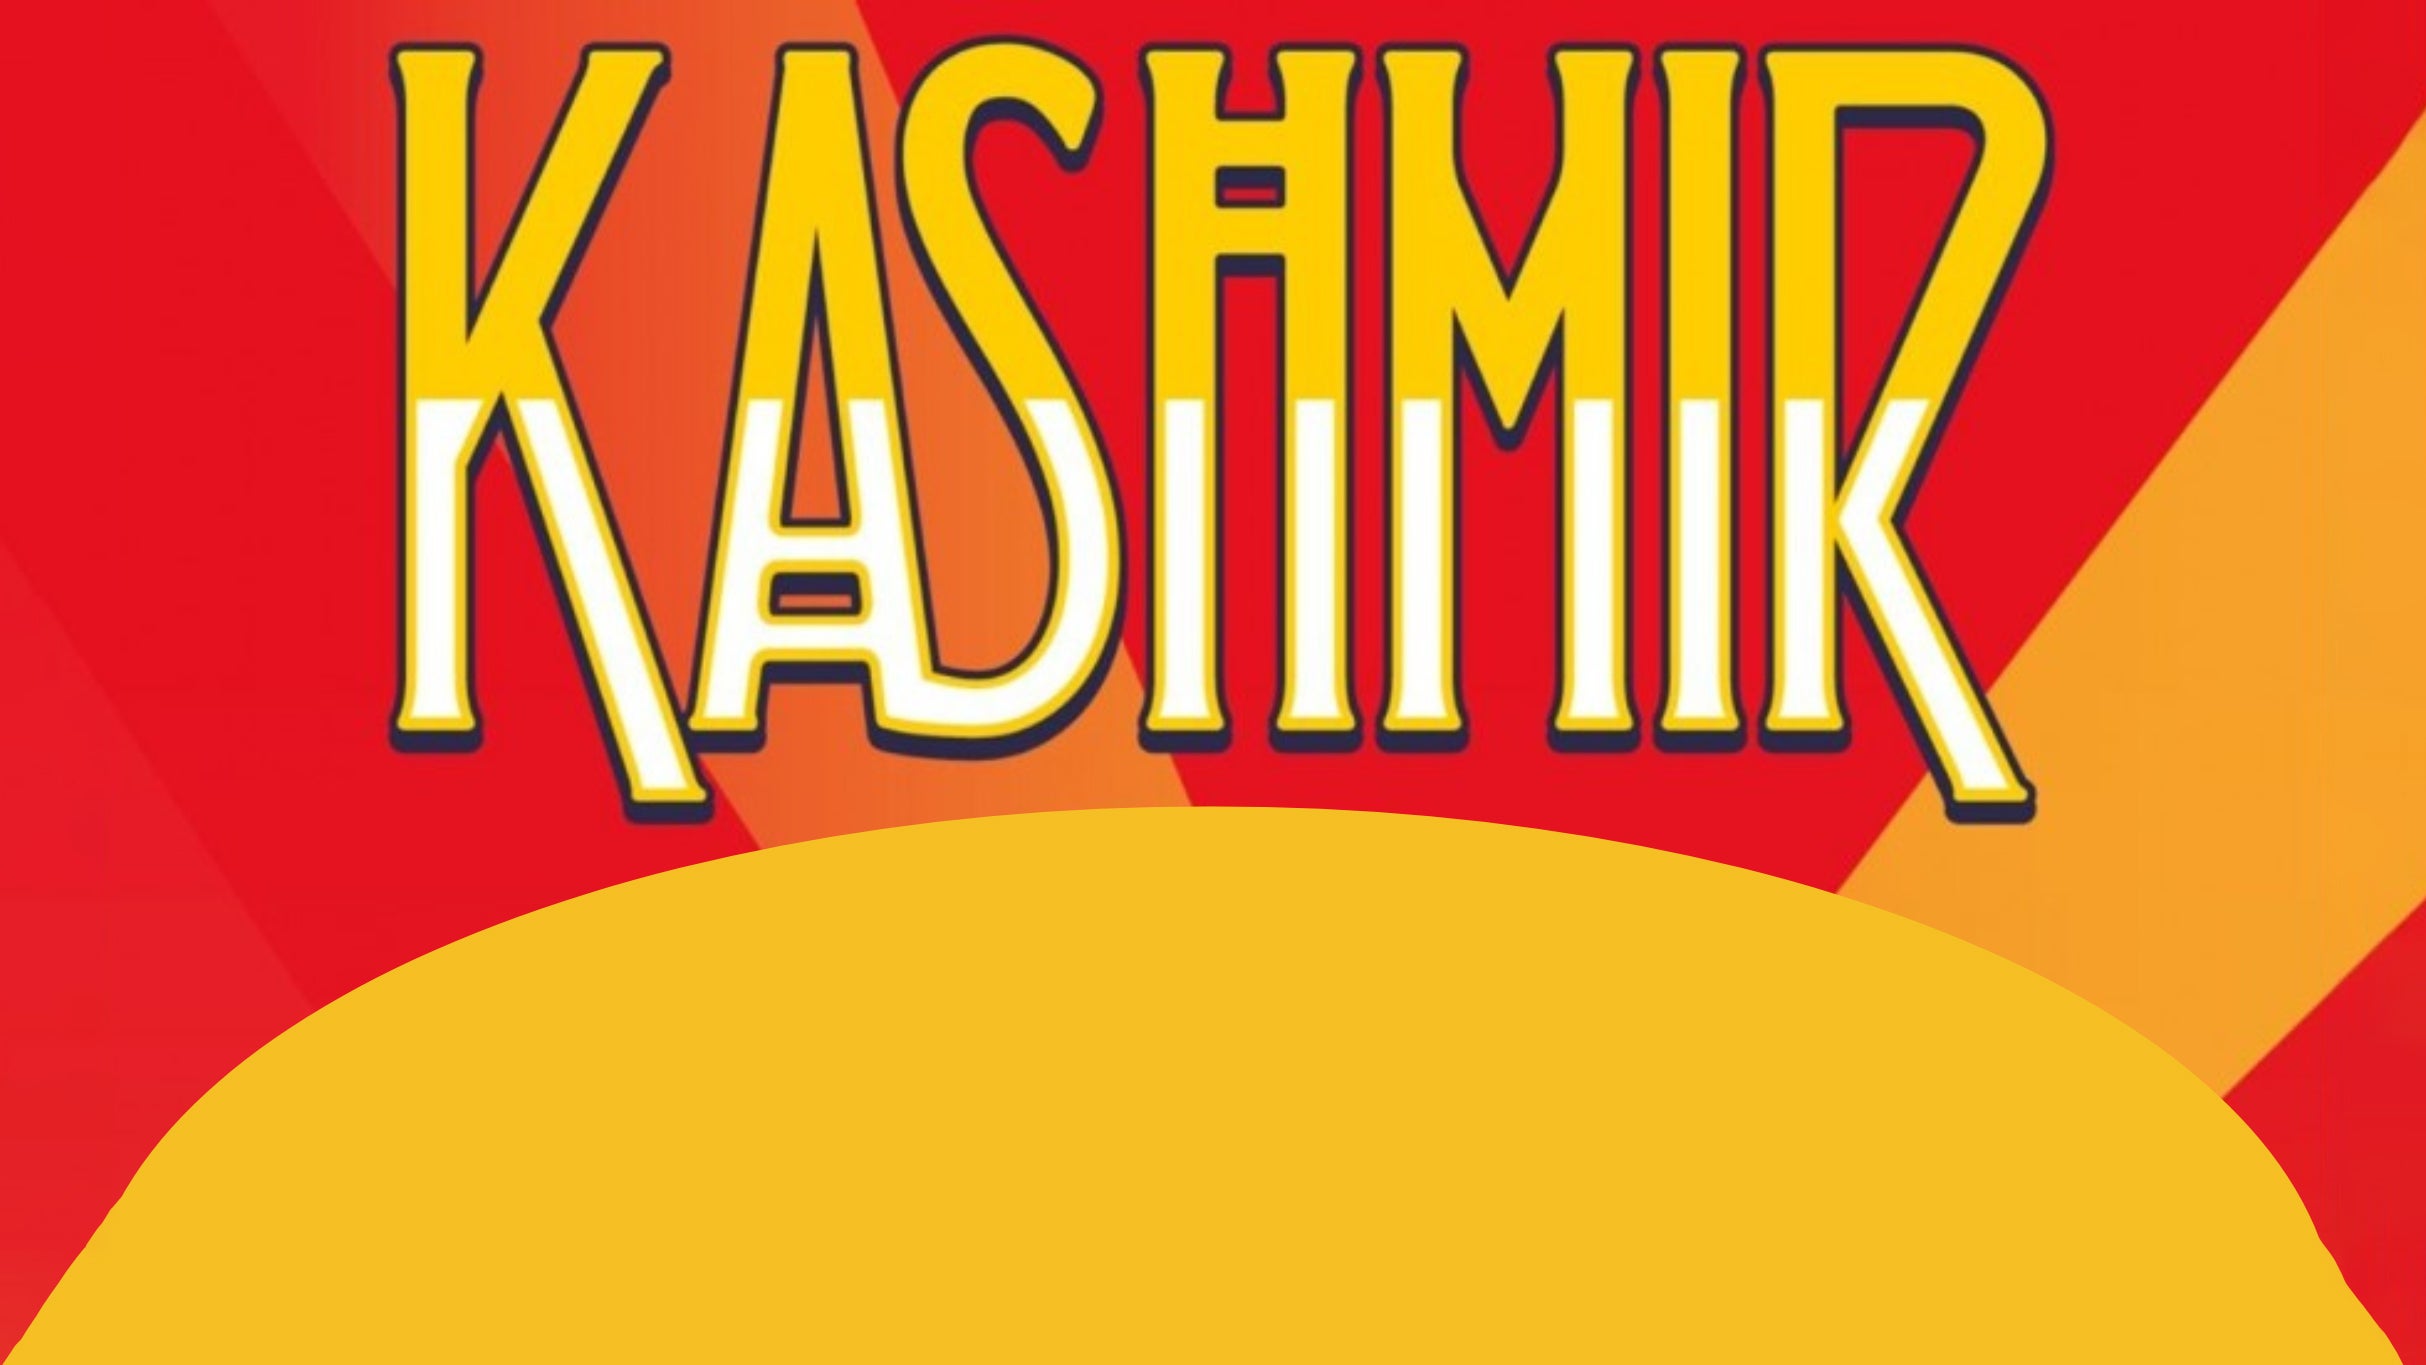 Kashmir in Salisbury promo photo for BOMH presale offer code